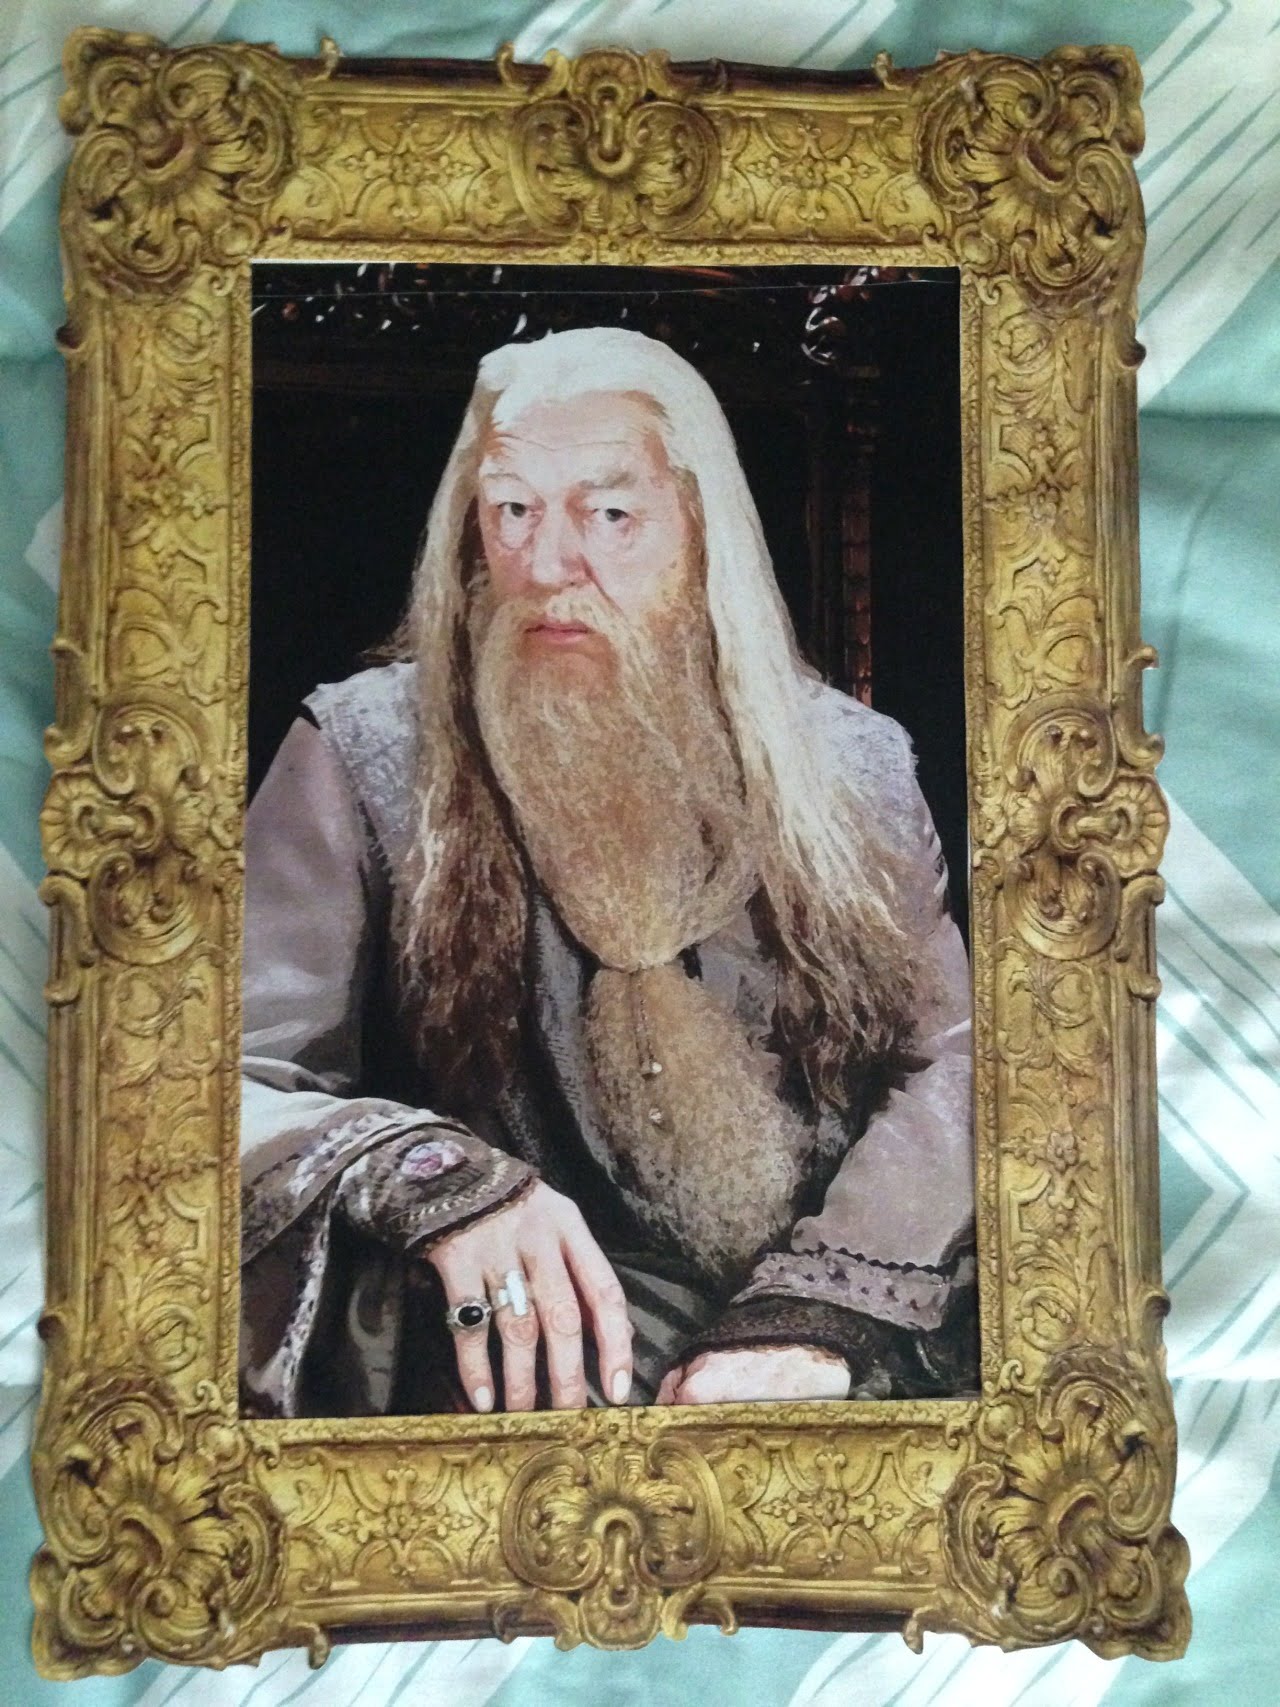 A Very Harry Halloween Hogwarts Portraits